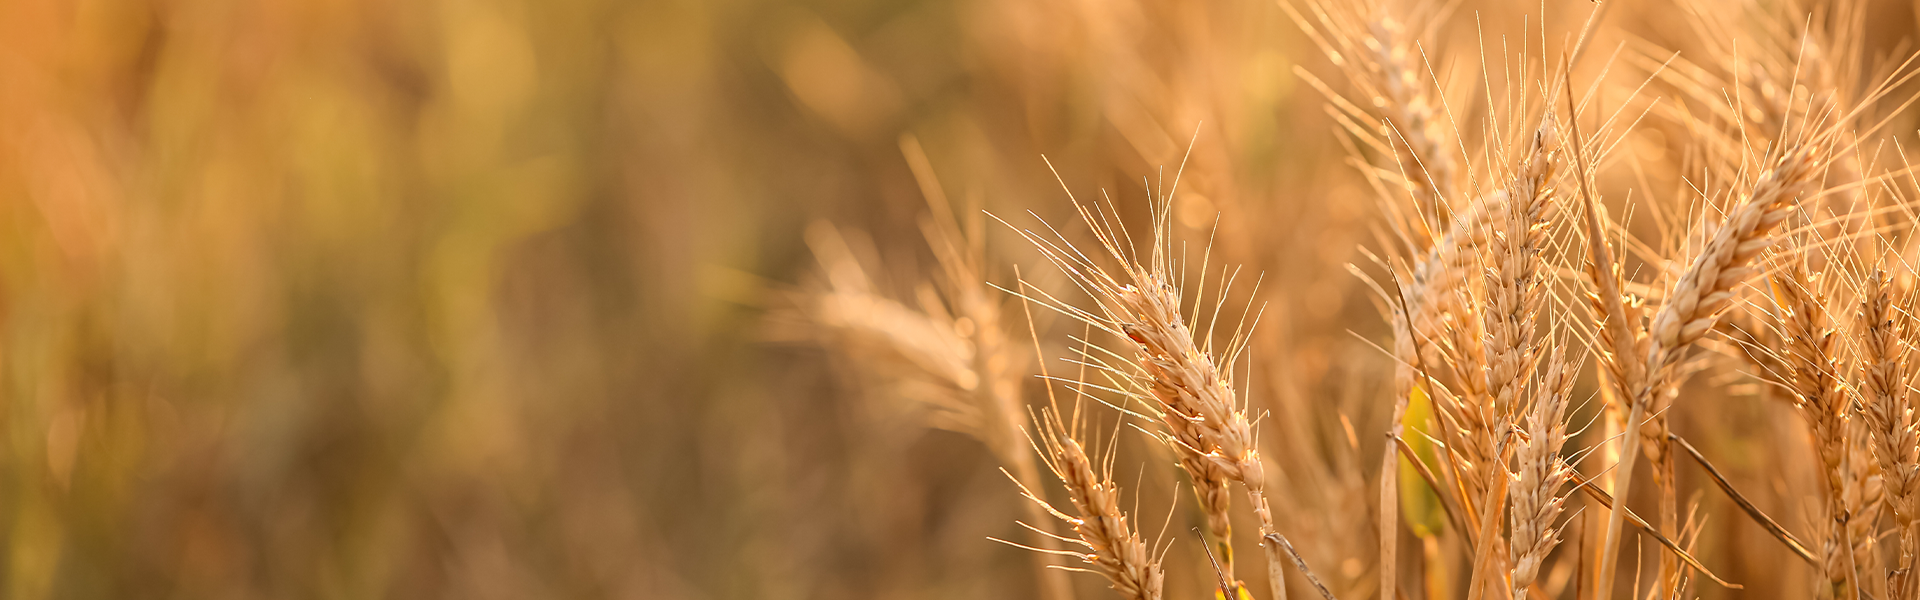 Grain Crop background image